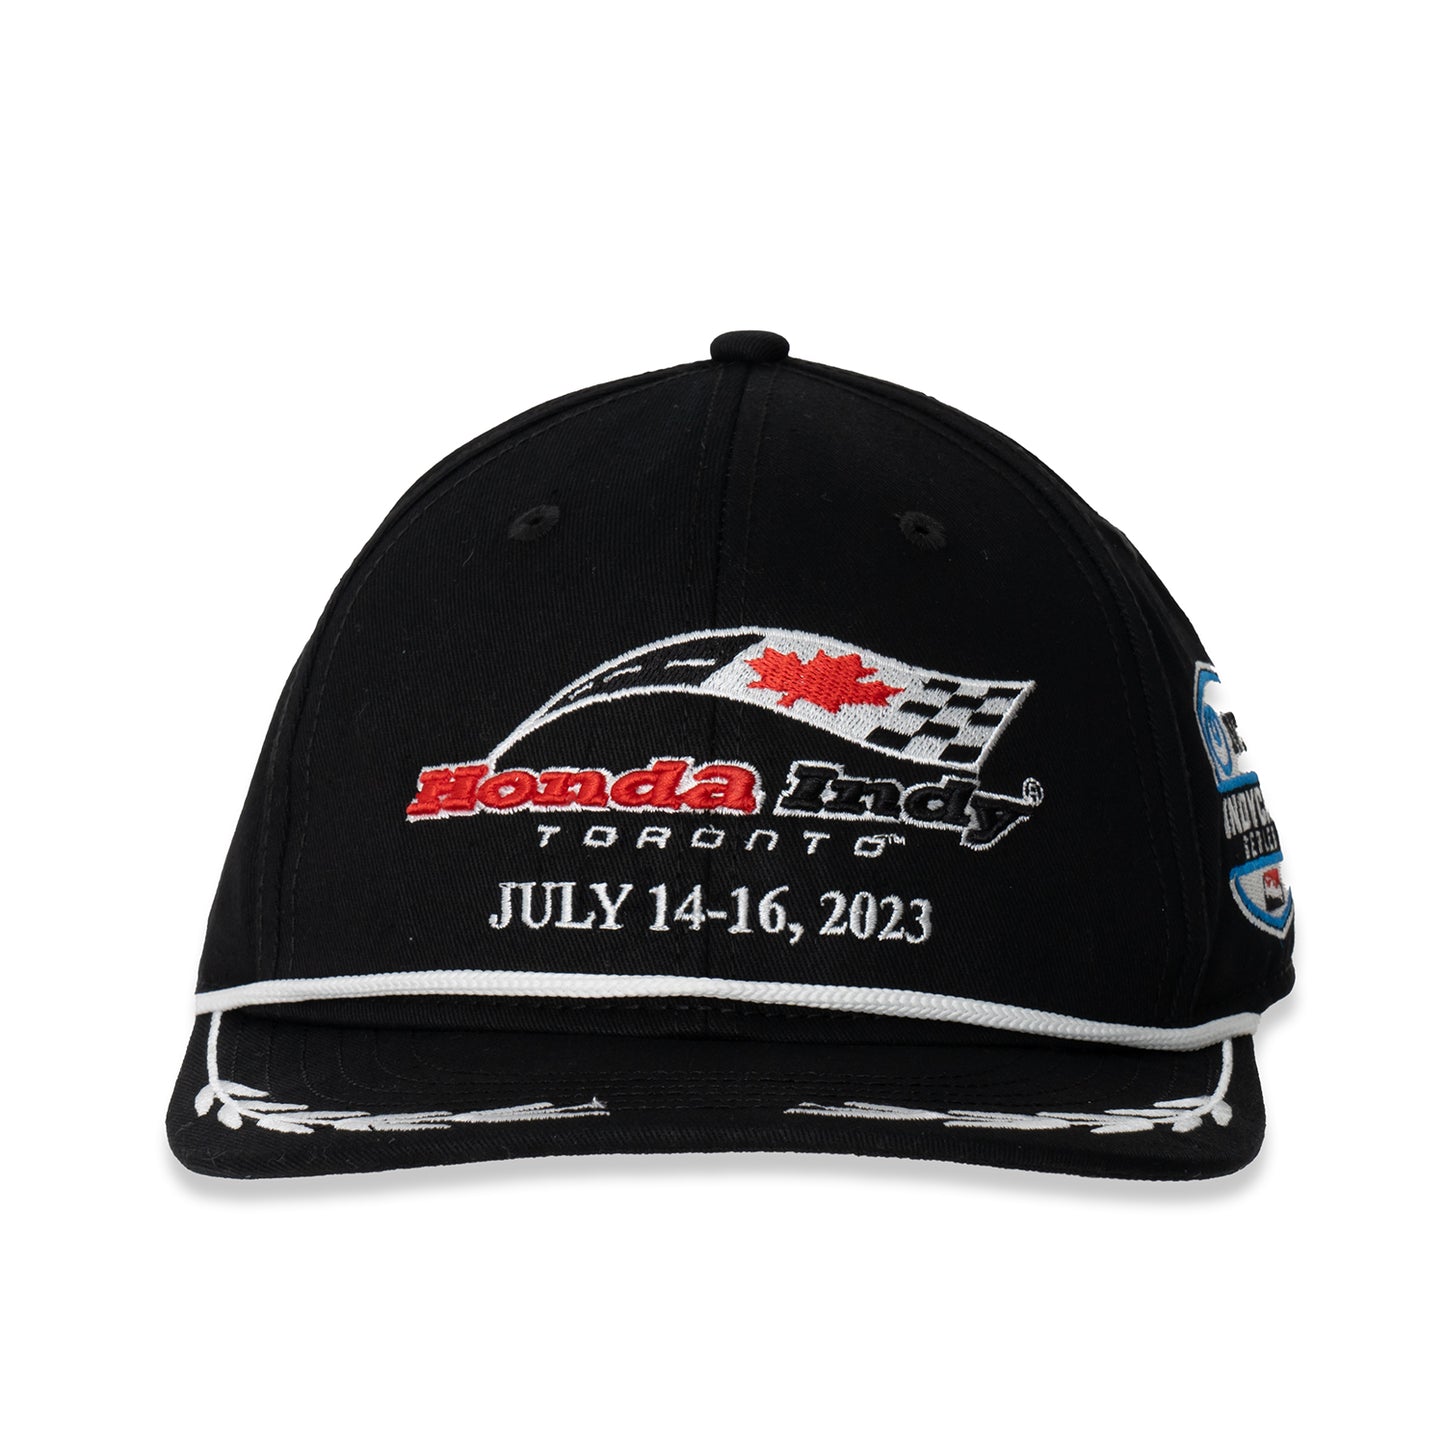 2023 Honda Indy Toronto Flatbill Event Hat - Black